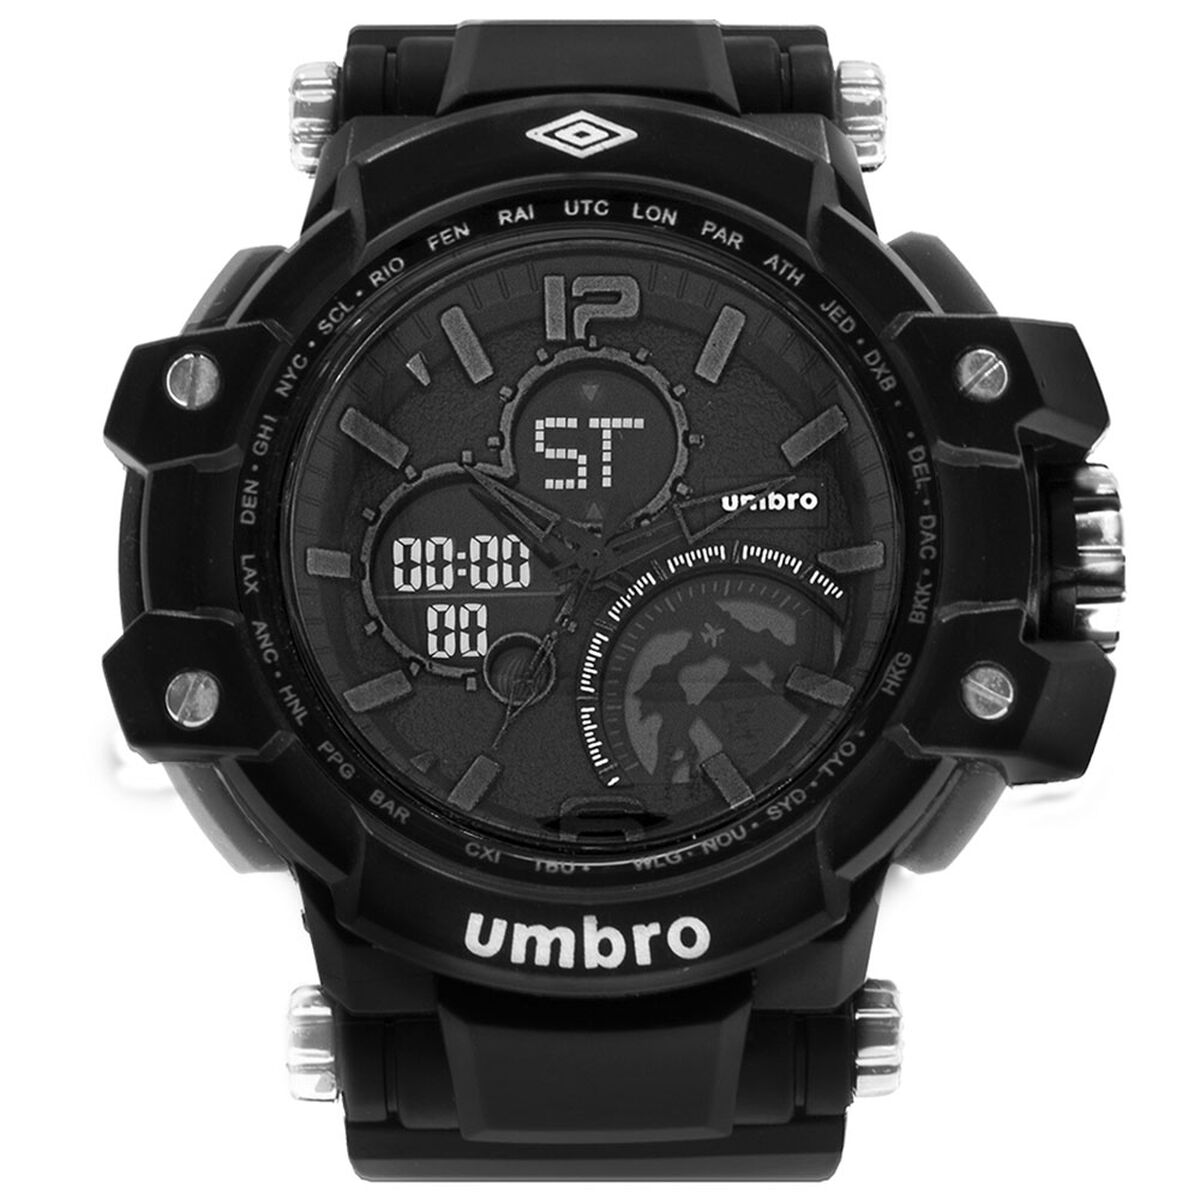 Reloj Digital UMBRO Modelo UMB-085-5